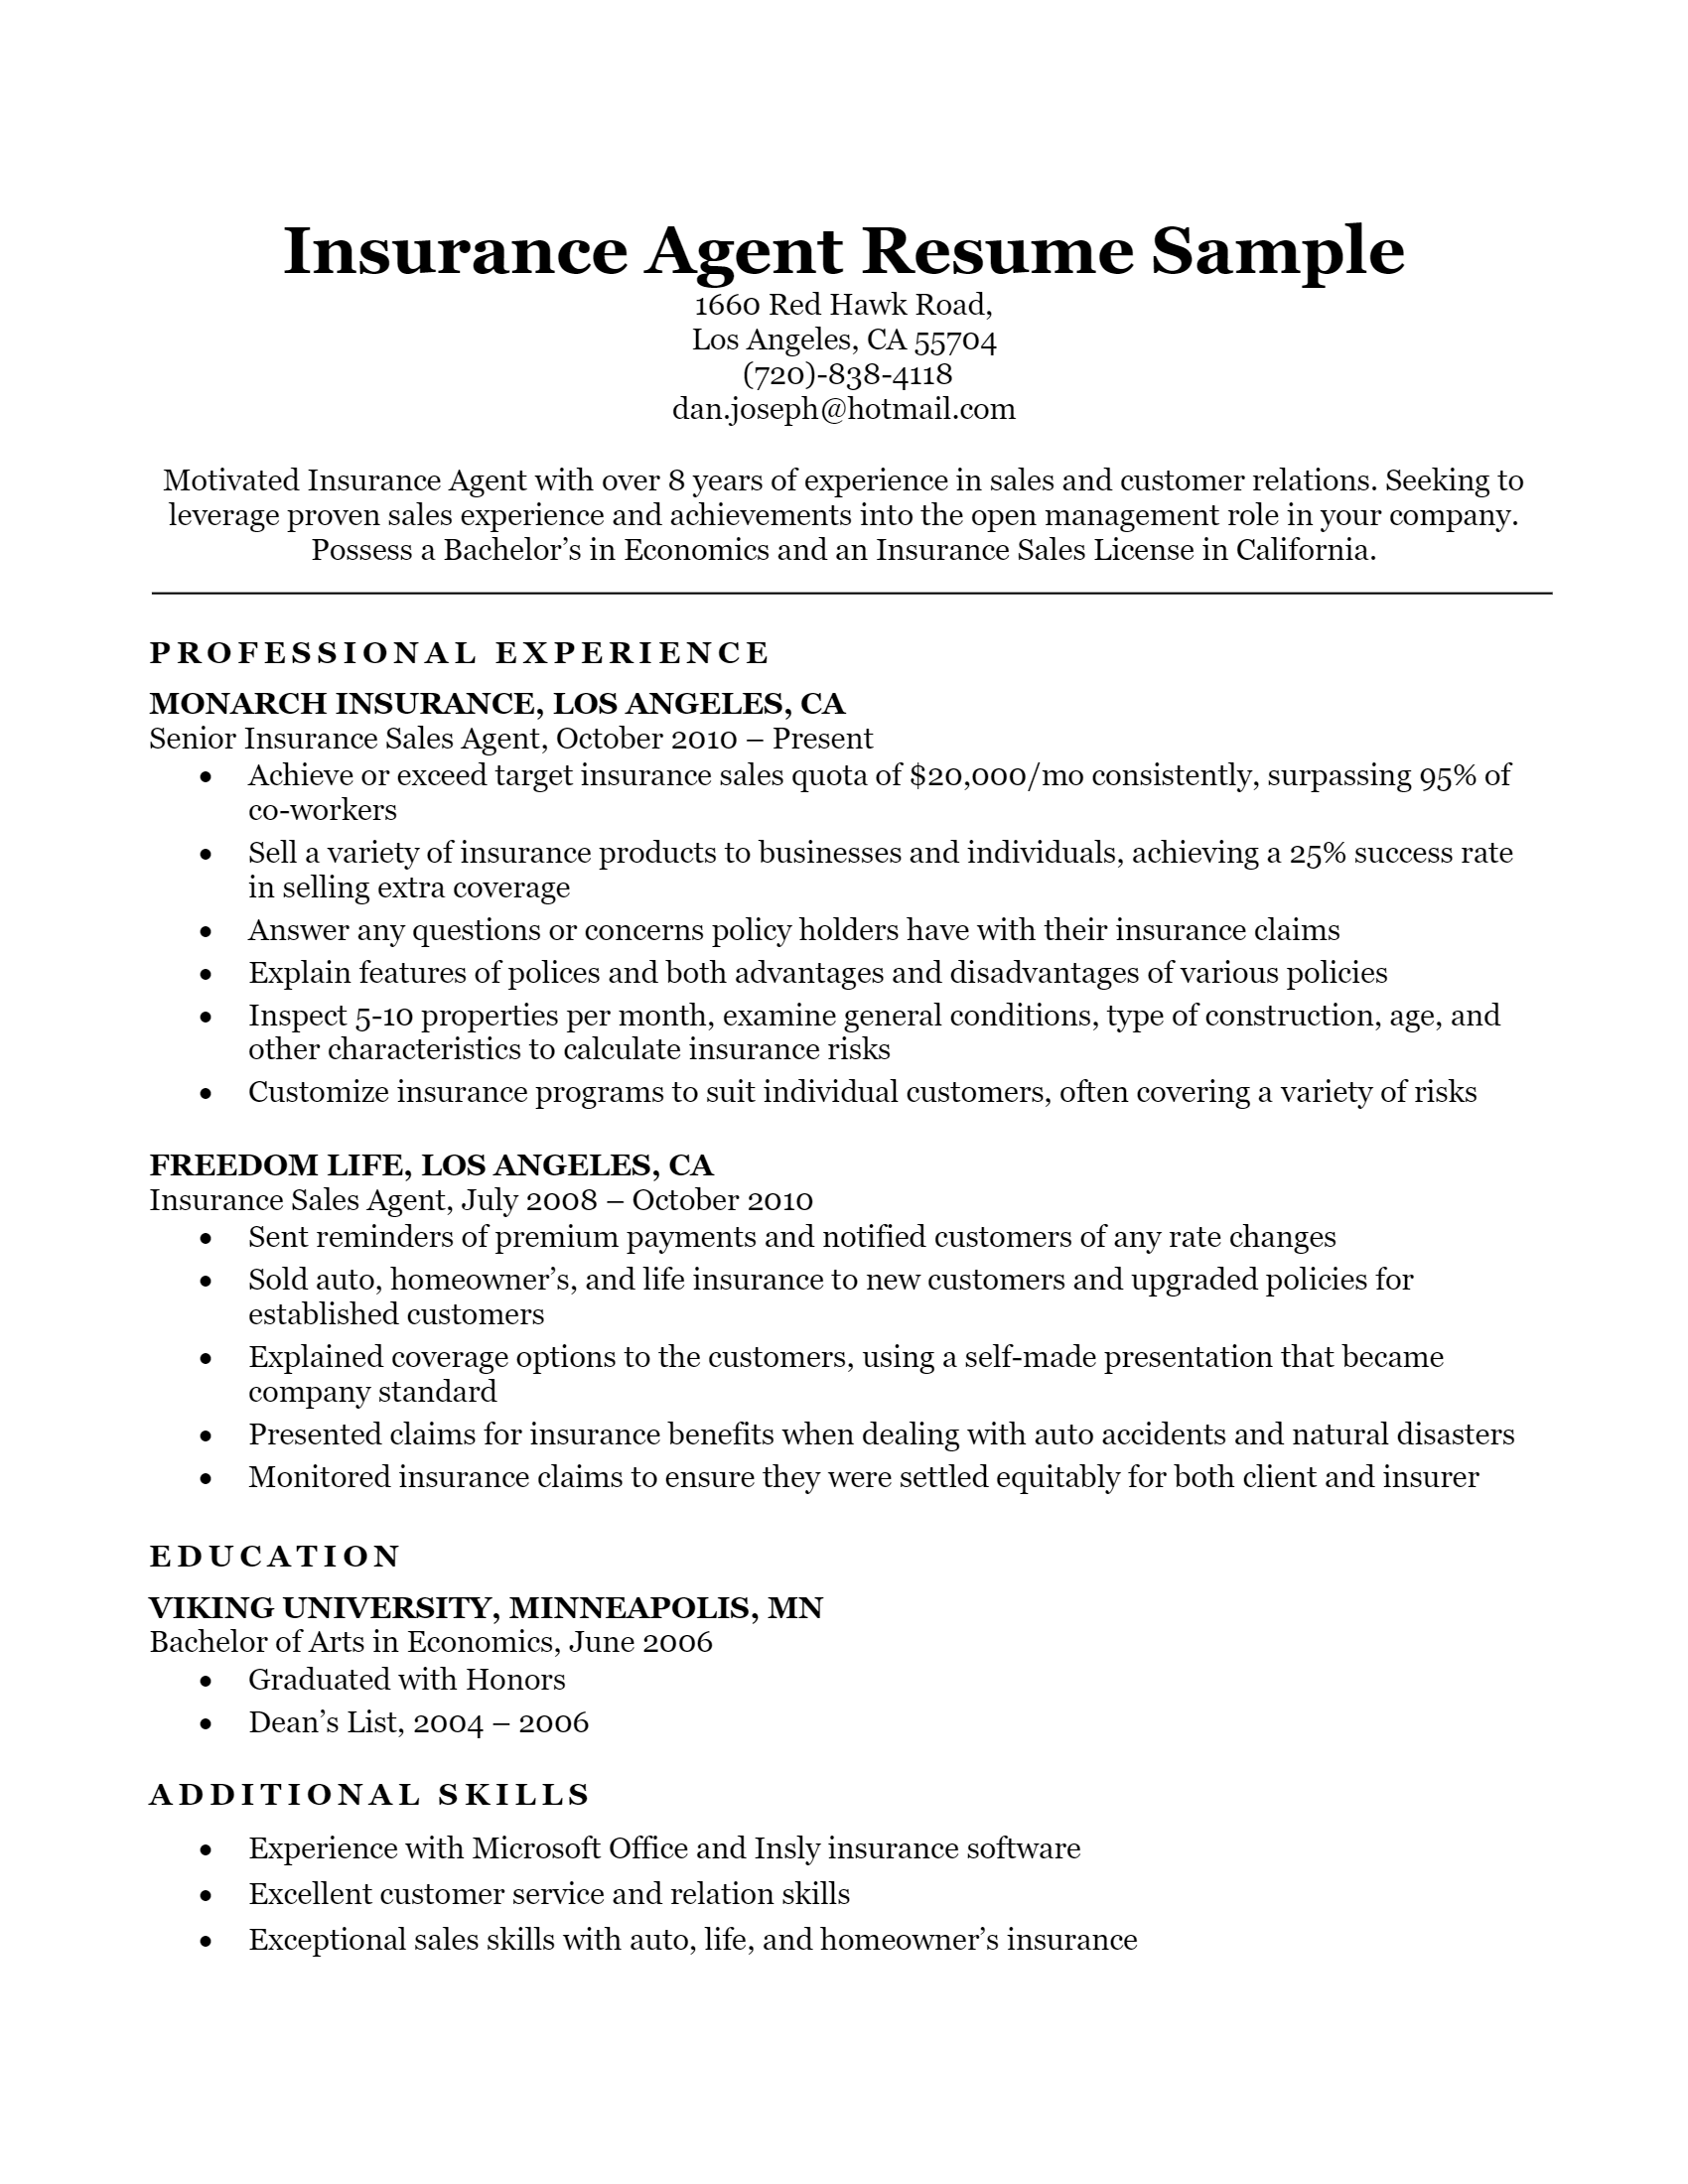 Insurance Agent Resume .Docx (Word)